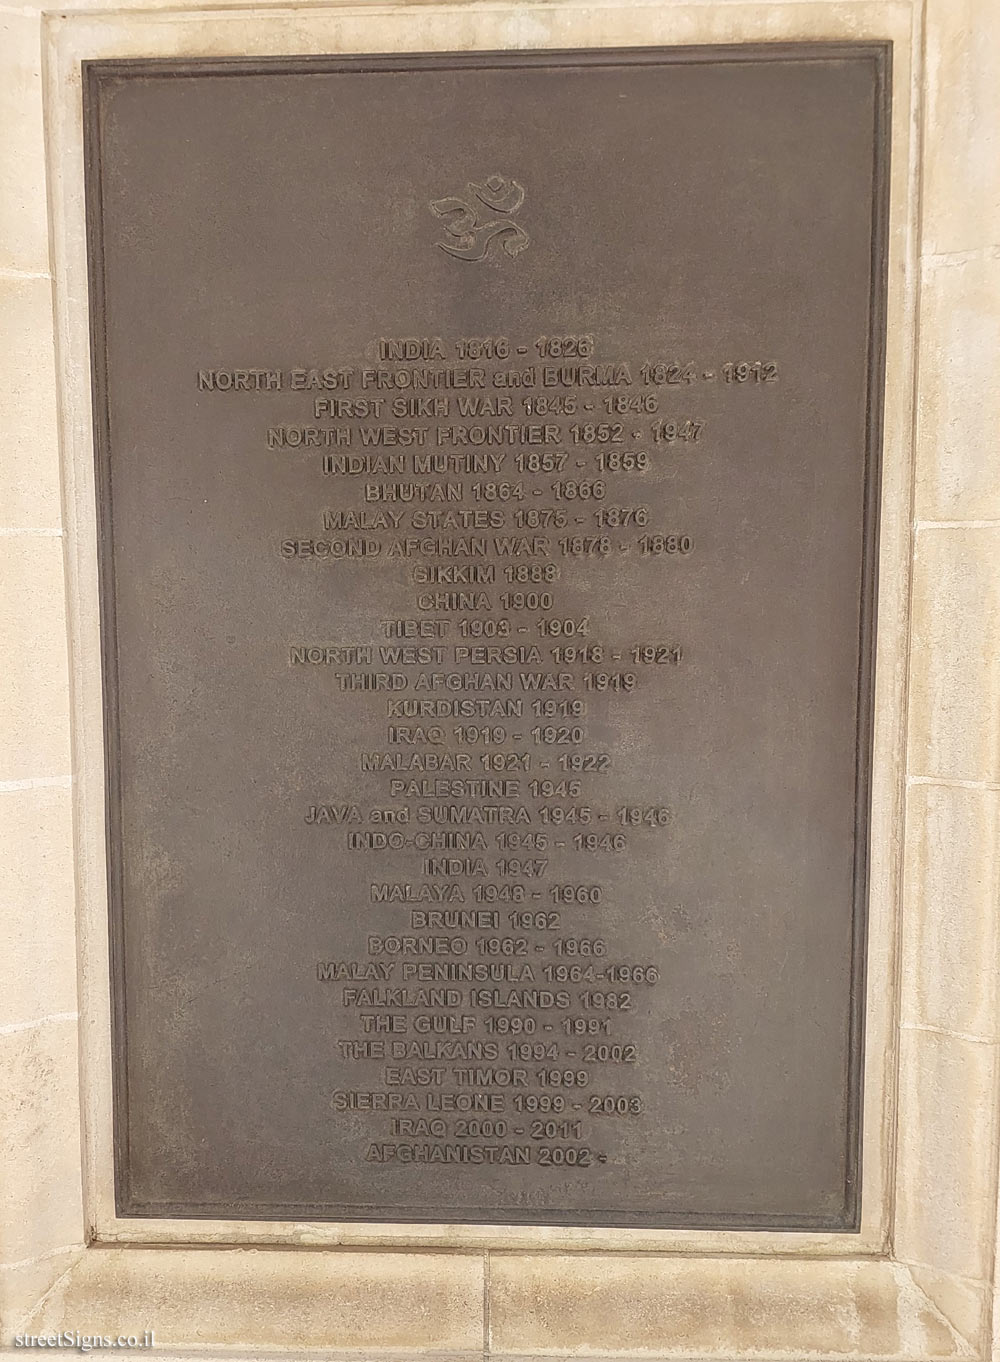 London - Gurkha Memorial - 85 Whitehall Ct, London SW1A 2EL, UK